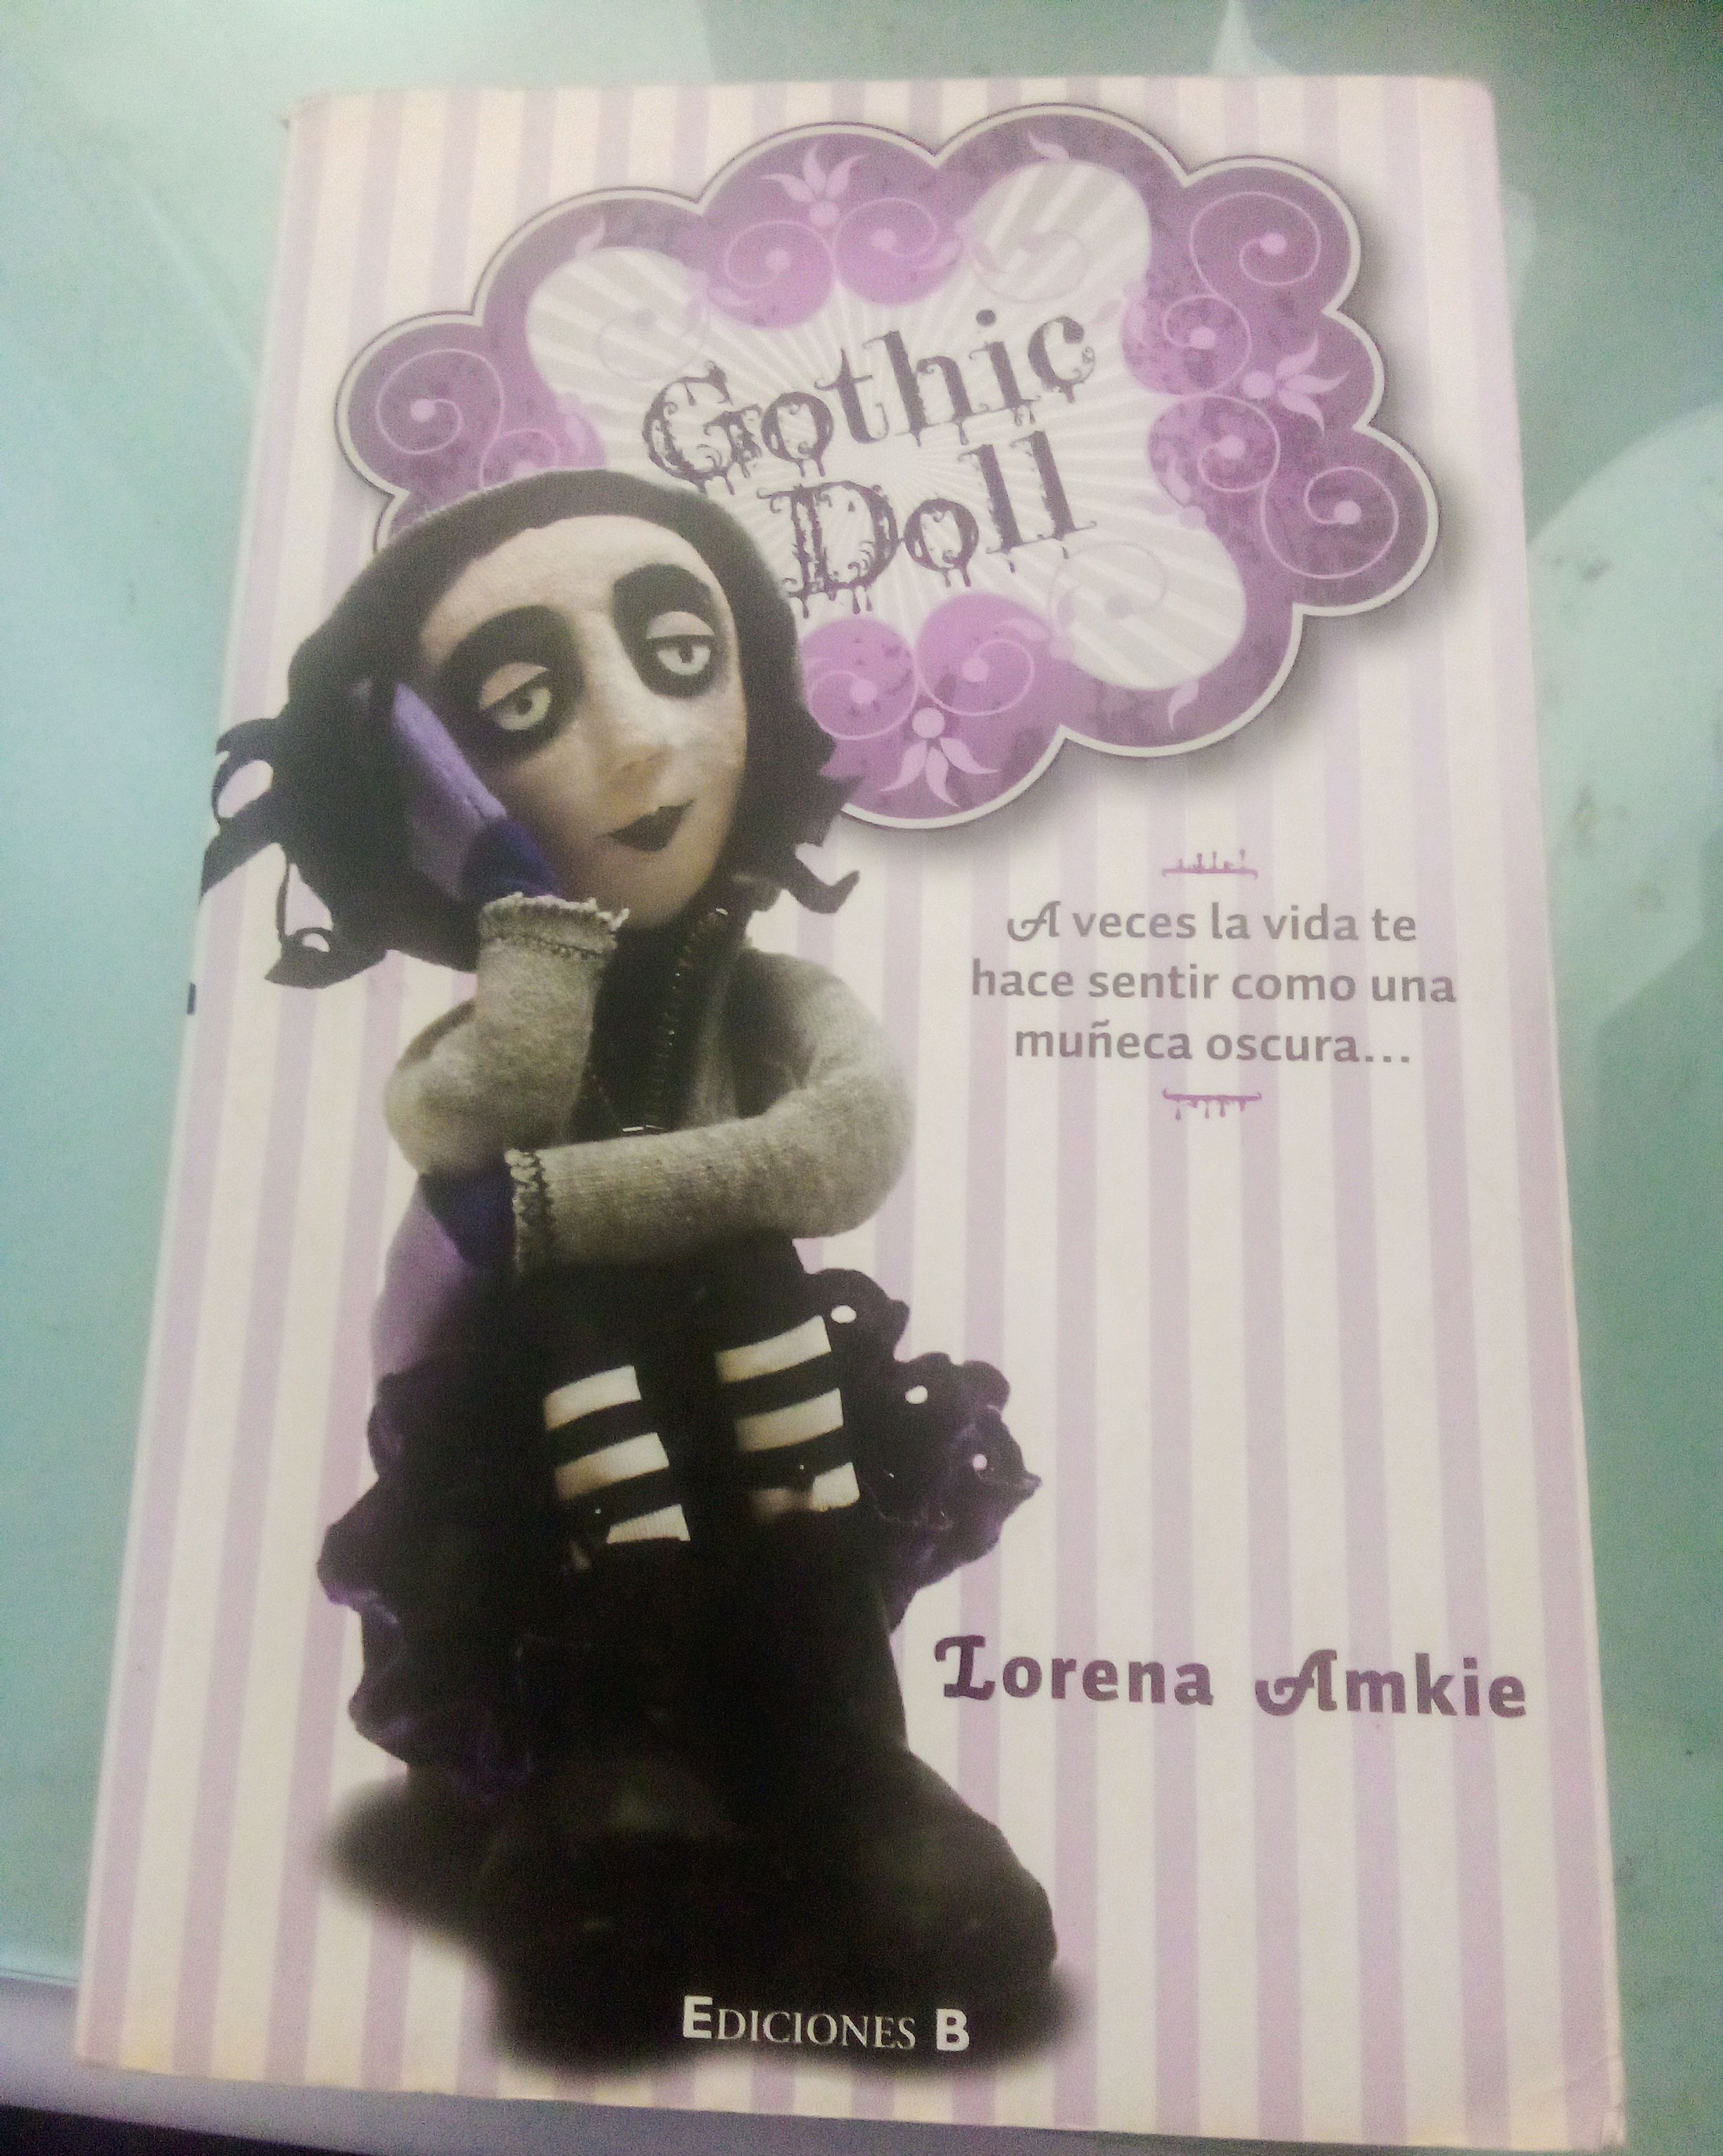  Gothic DollFantasía